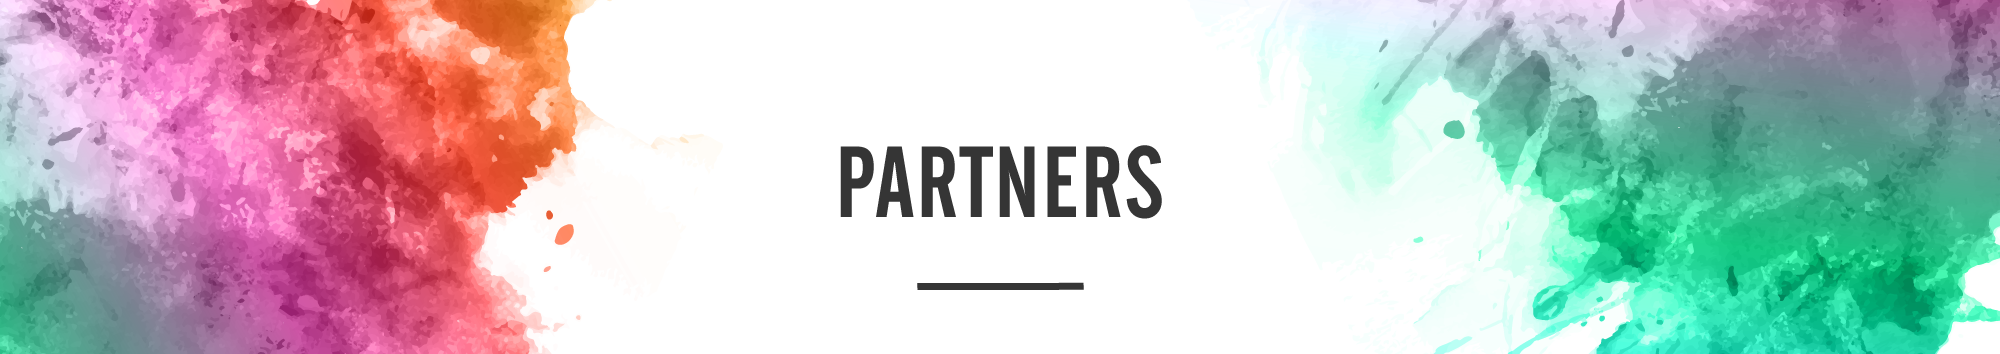 “Partners”/